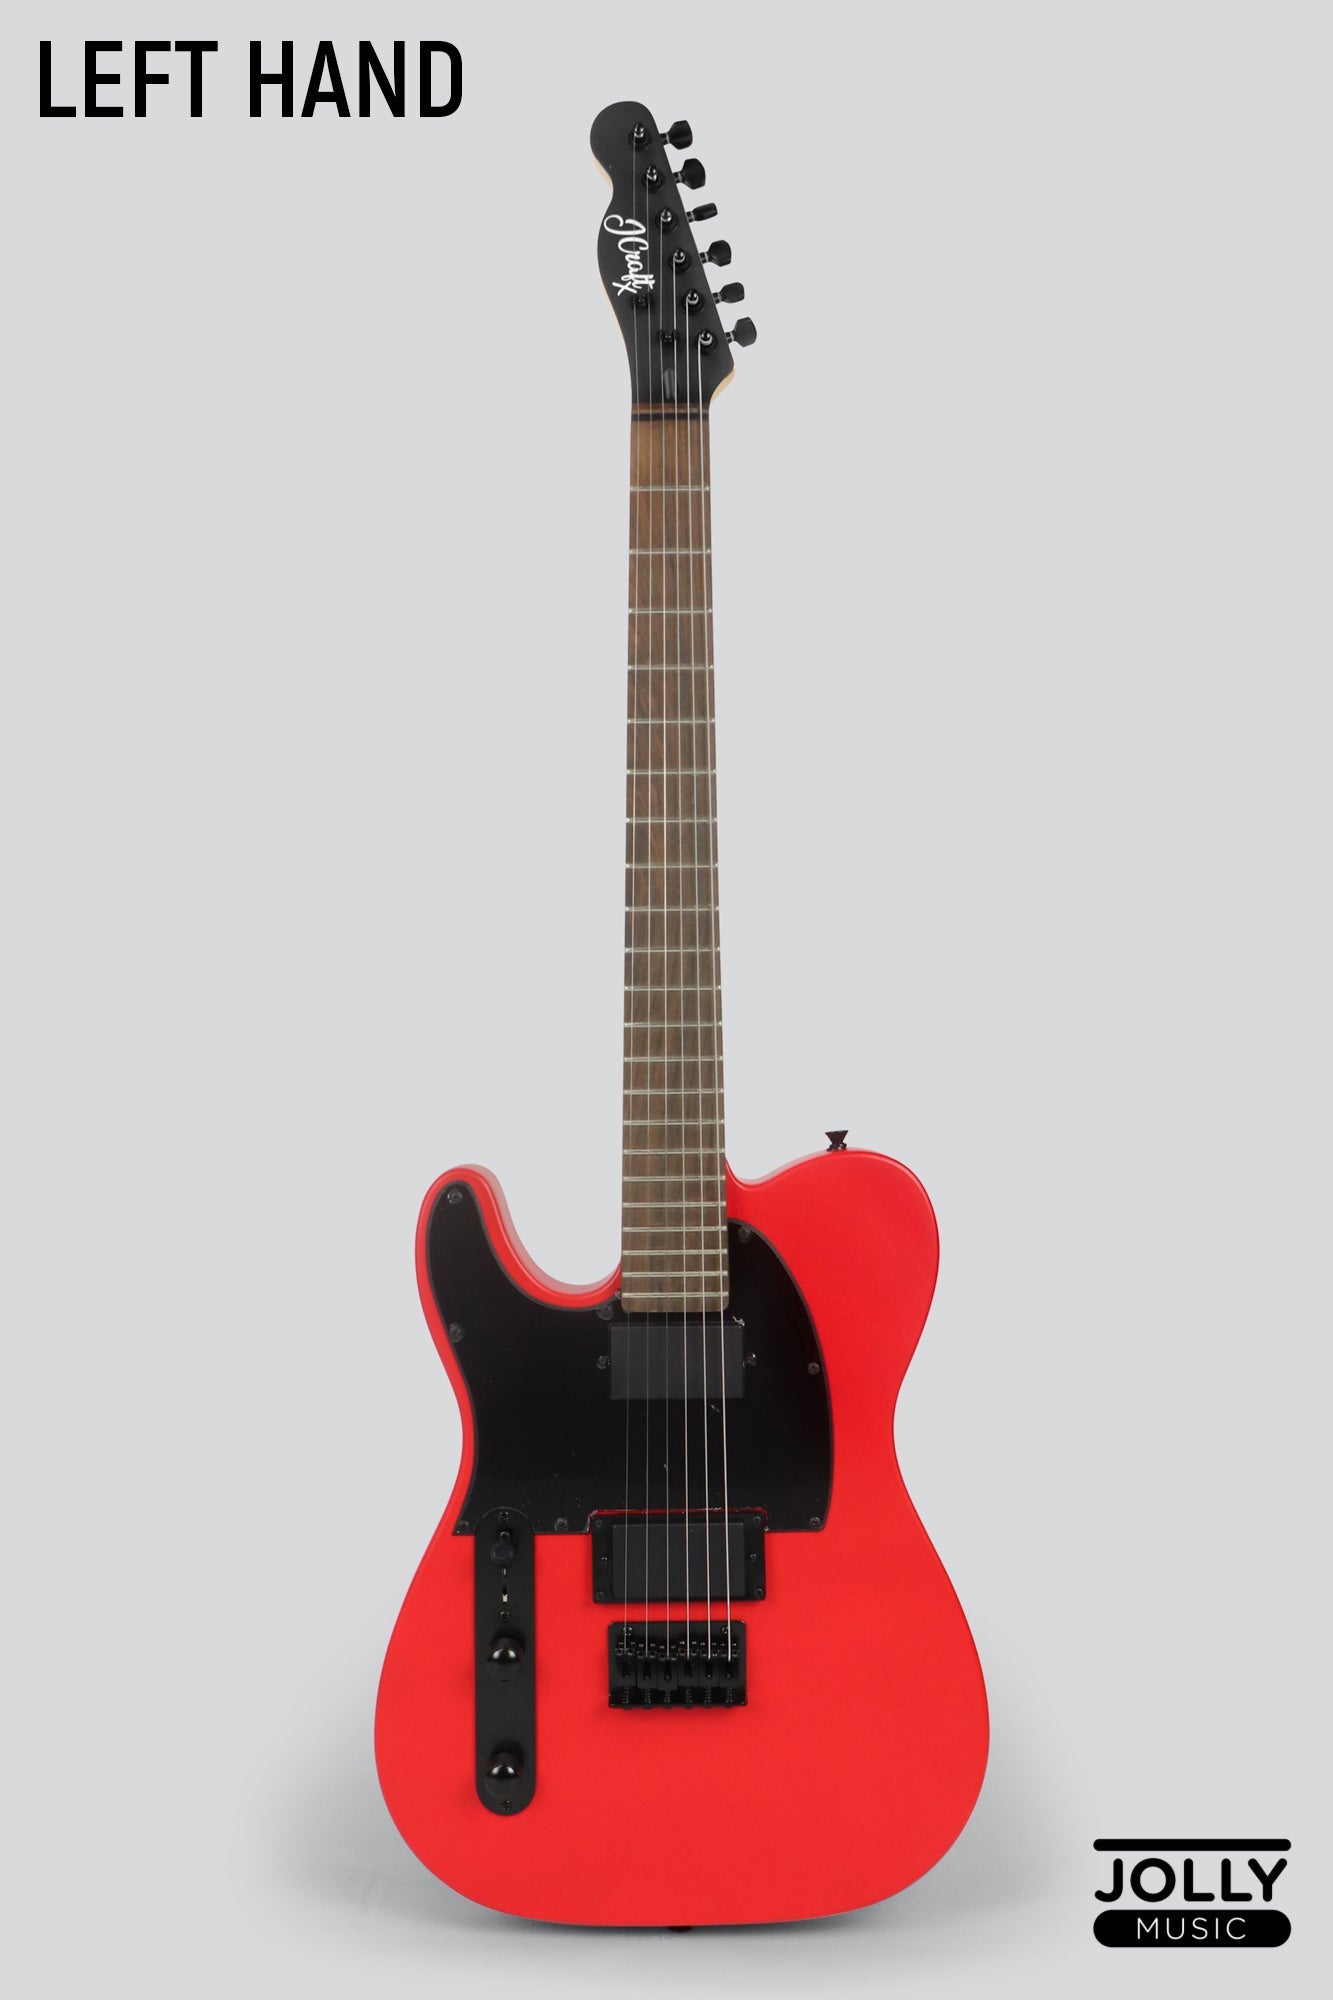 JCraft X Series LTX-1 LEFT HAND Electric Guitar with Gigbag - Lockdown Red Ltd. Ed.